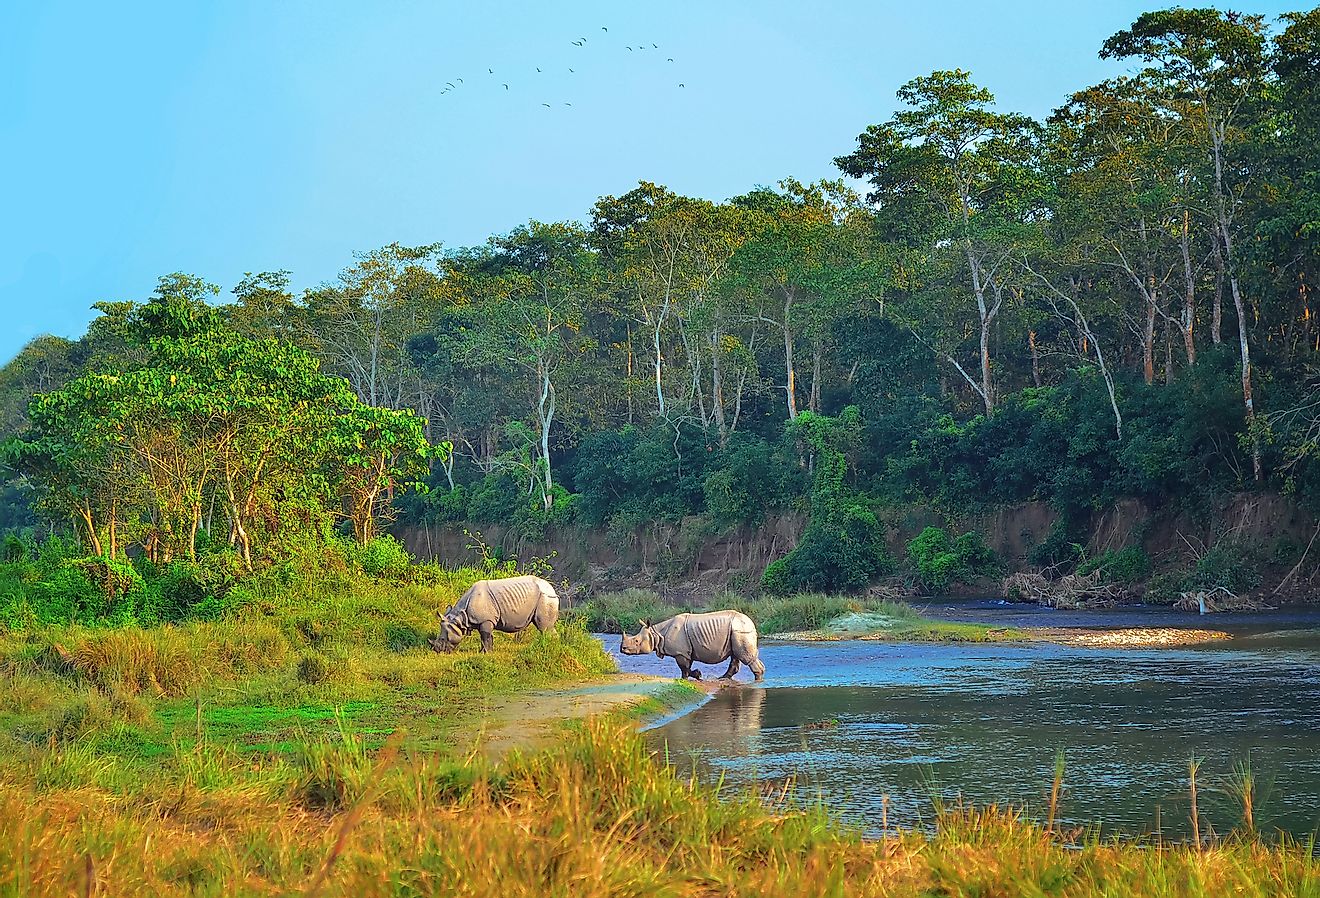 Indian rhinos in Chitwan National Park in Nepal. Image credit: Natalia Maroz/Shutterstock.com